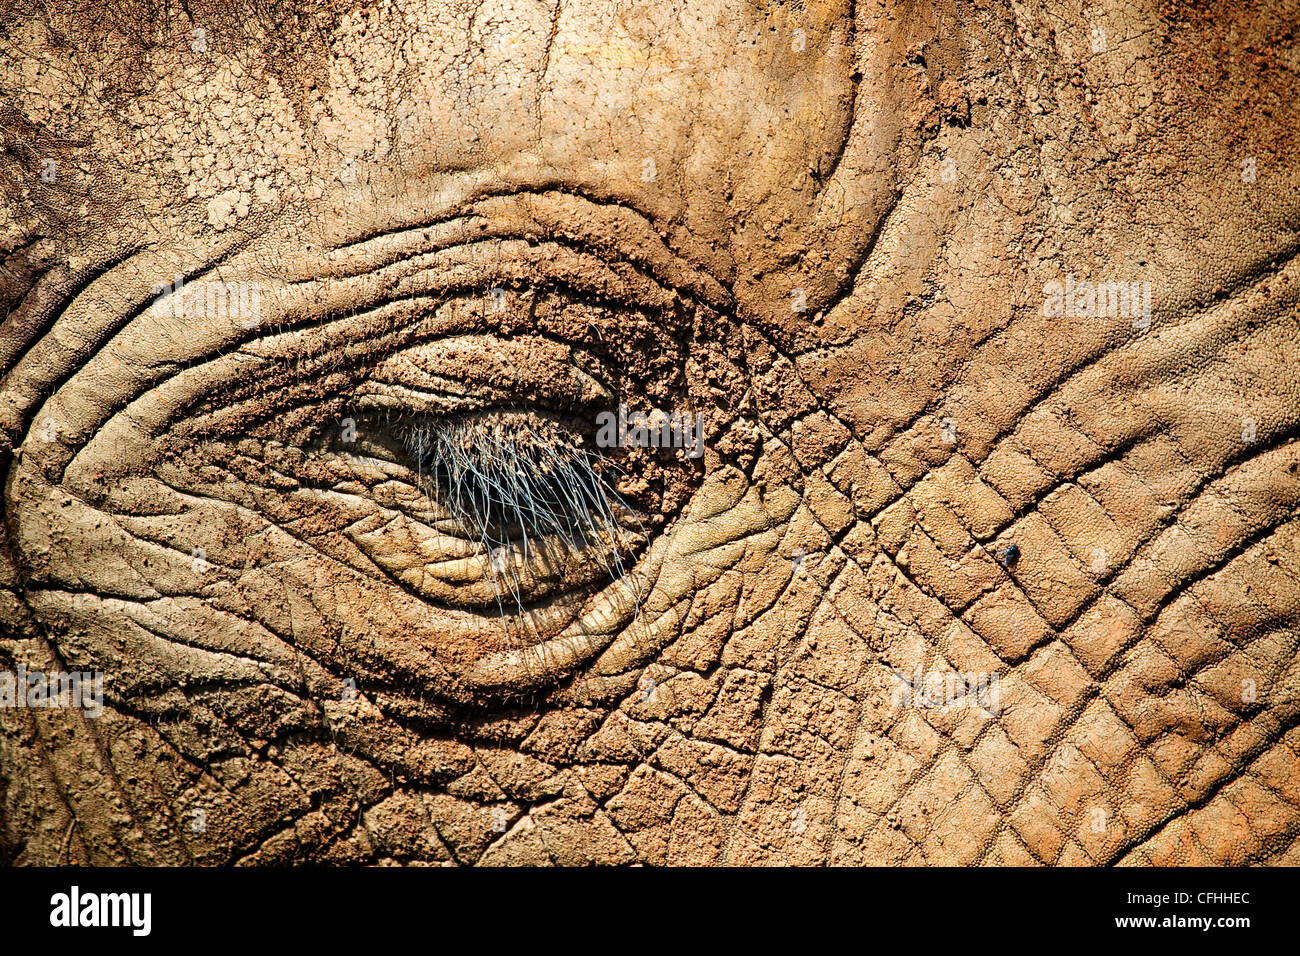 African elephant close up of face, Cabarceno, Spain Stock Photo